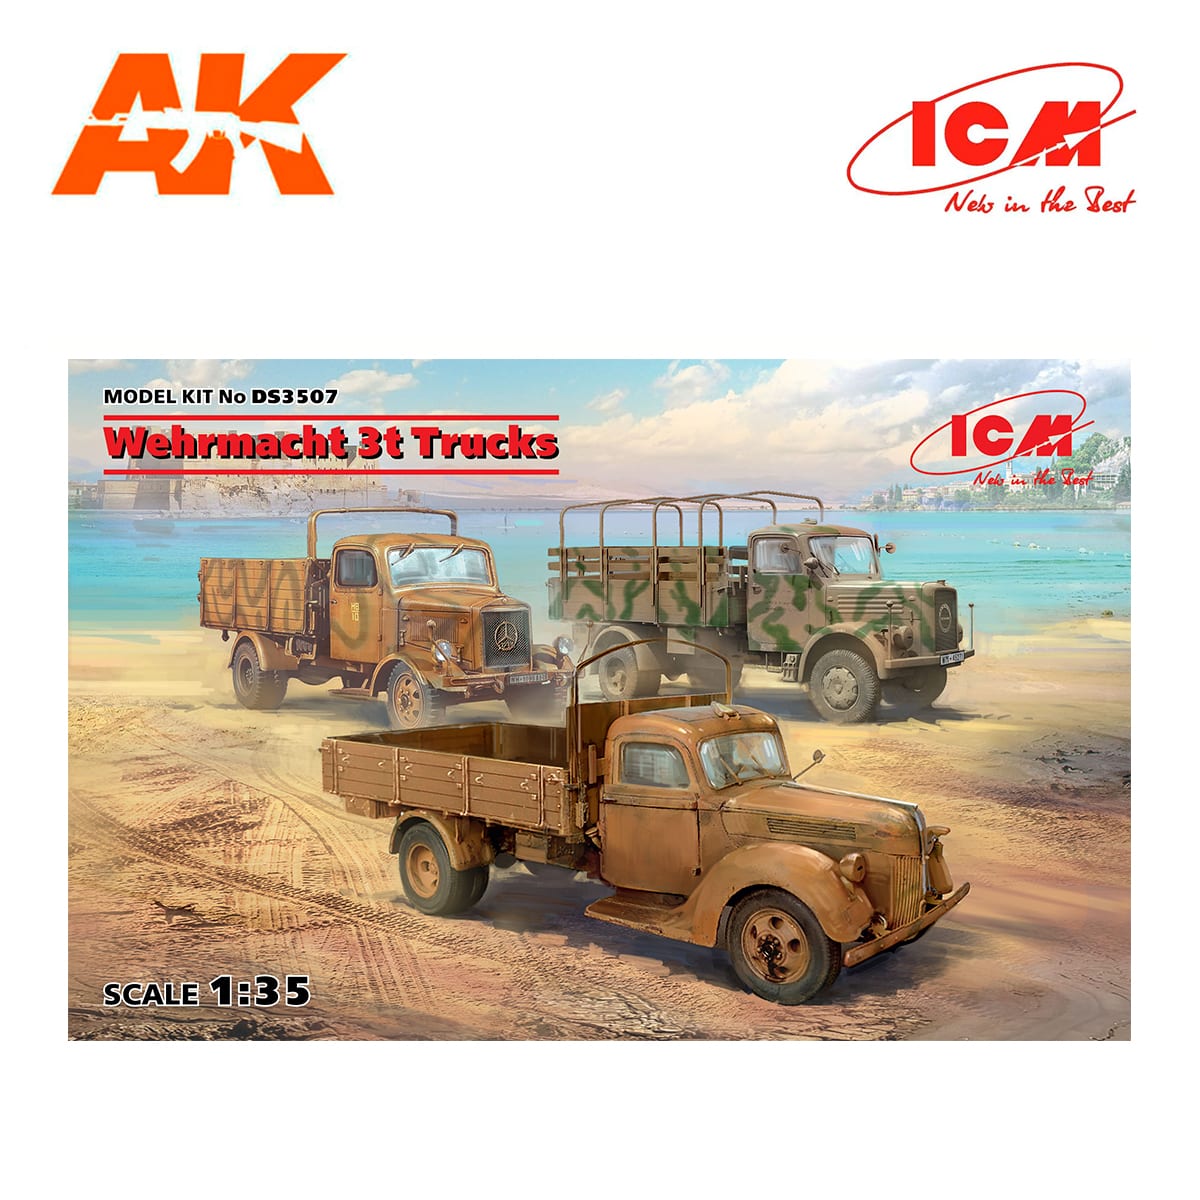 Wehrmacht 3t Trucks (V3000S, KHD S3000, L3000S) 1/35